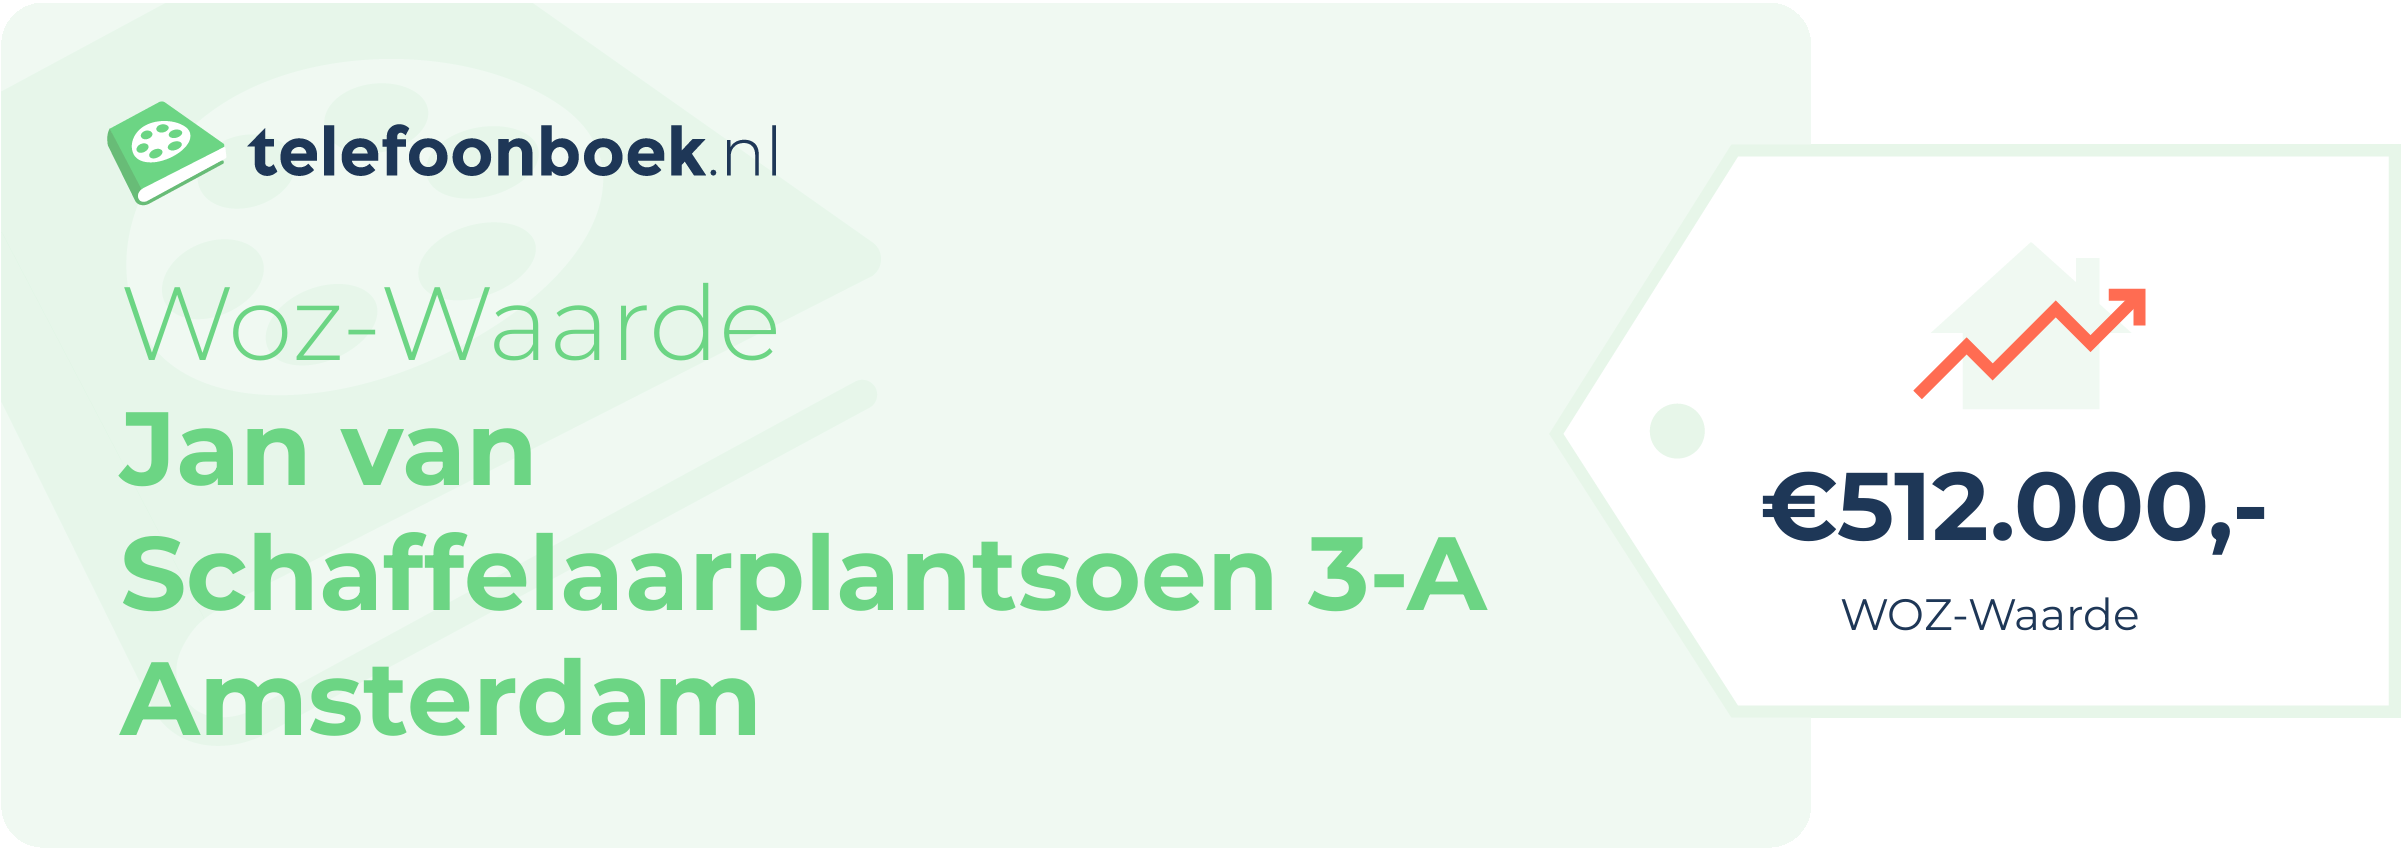 WOZ-waarde Jan Van Schaffelaarplantsoen 3-A Amsterdam